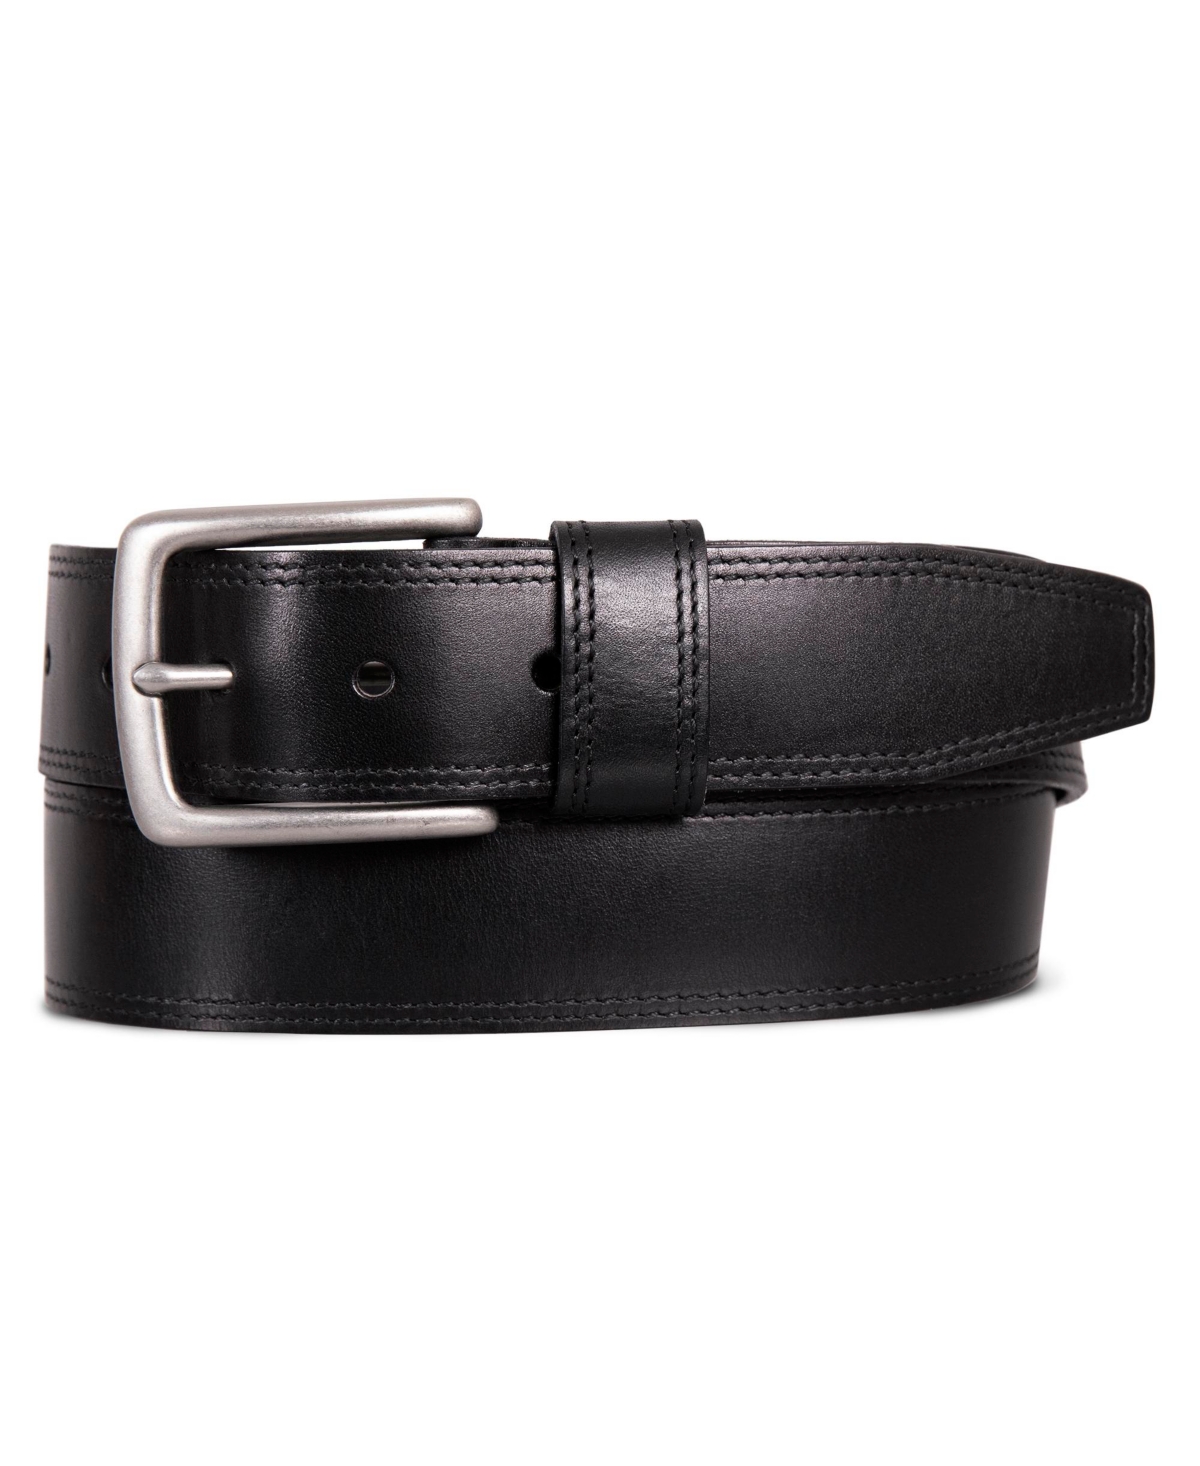 Men's Double Needle Stitched Leather Belt - Black